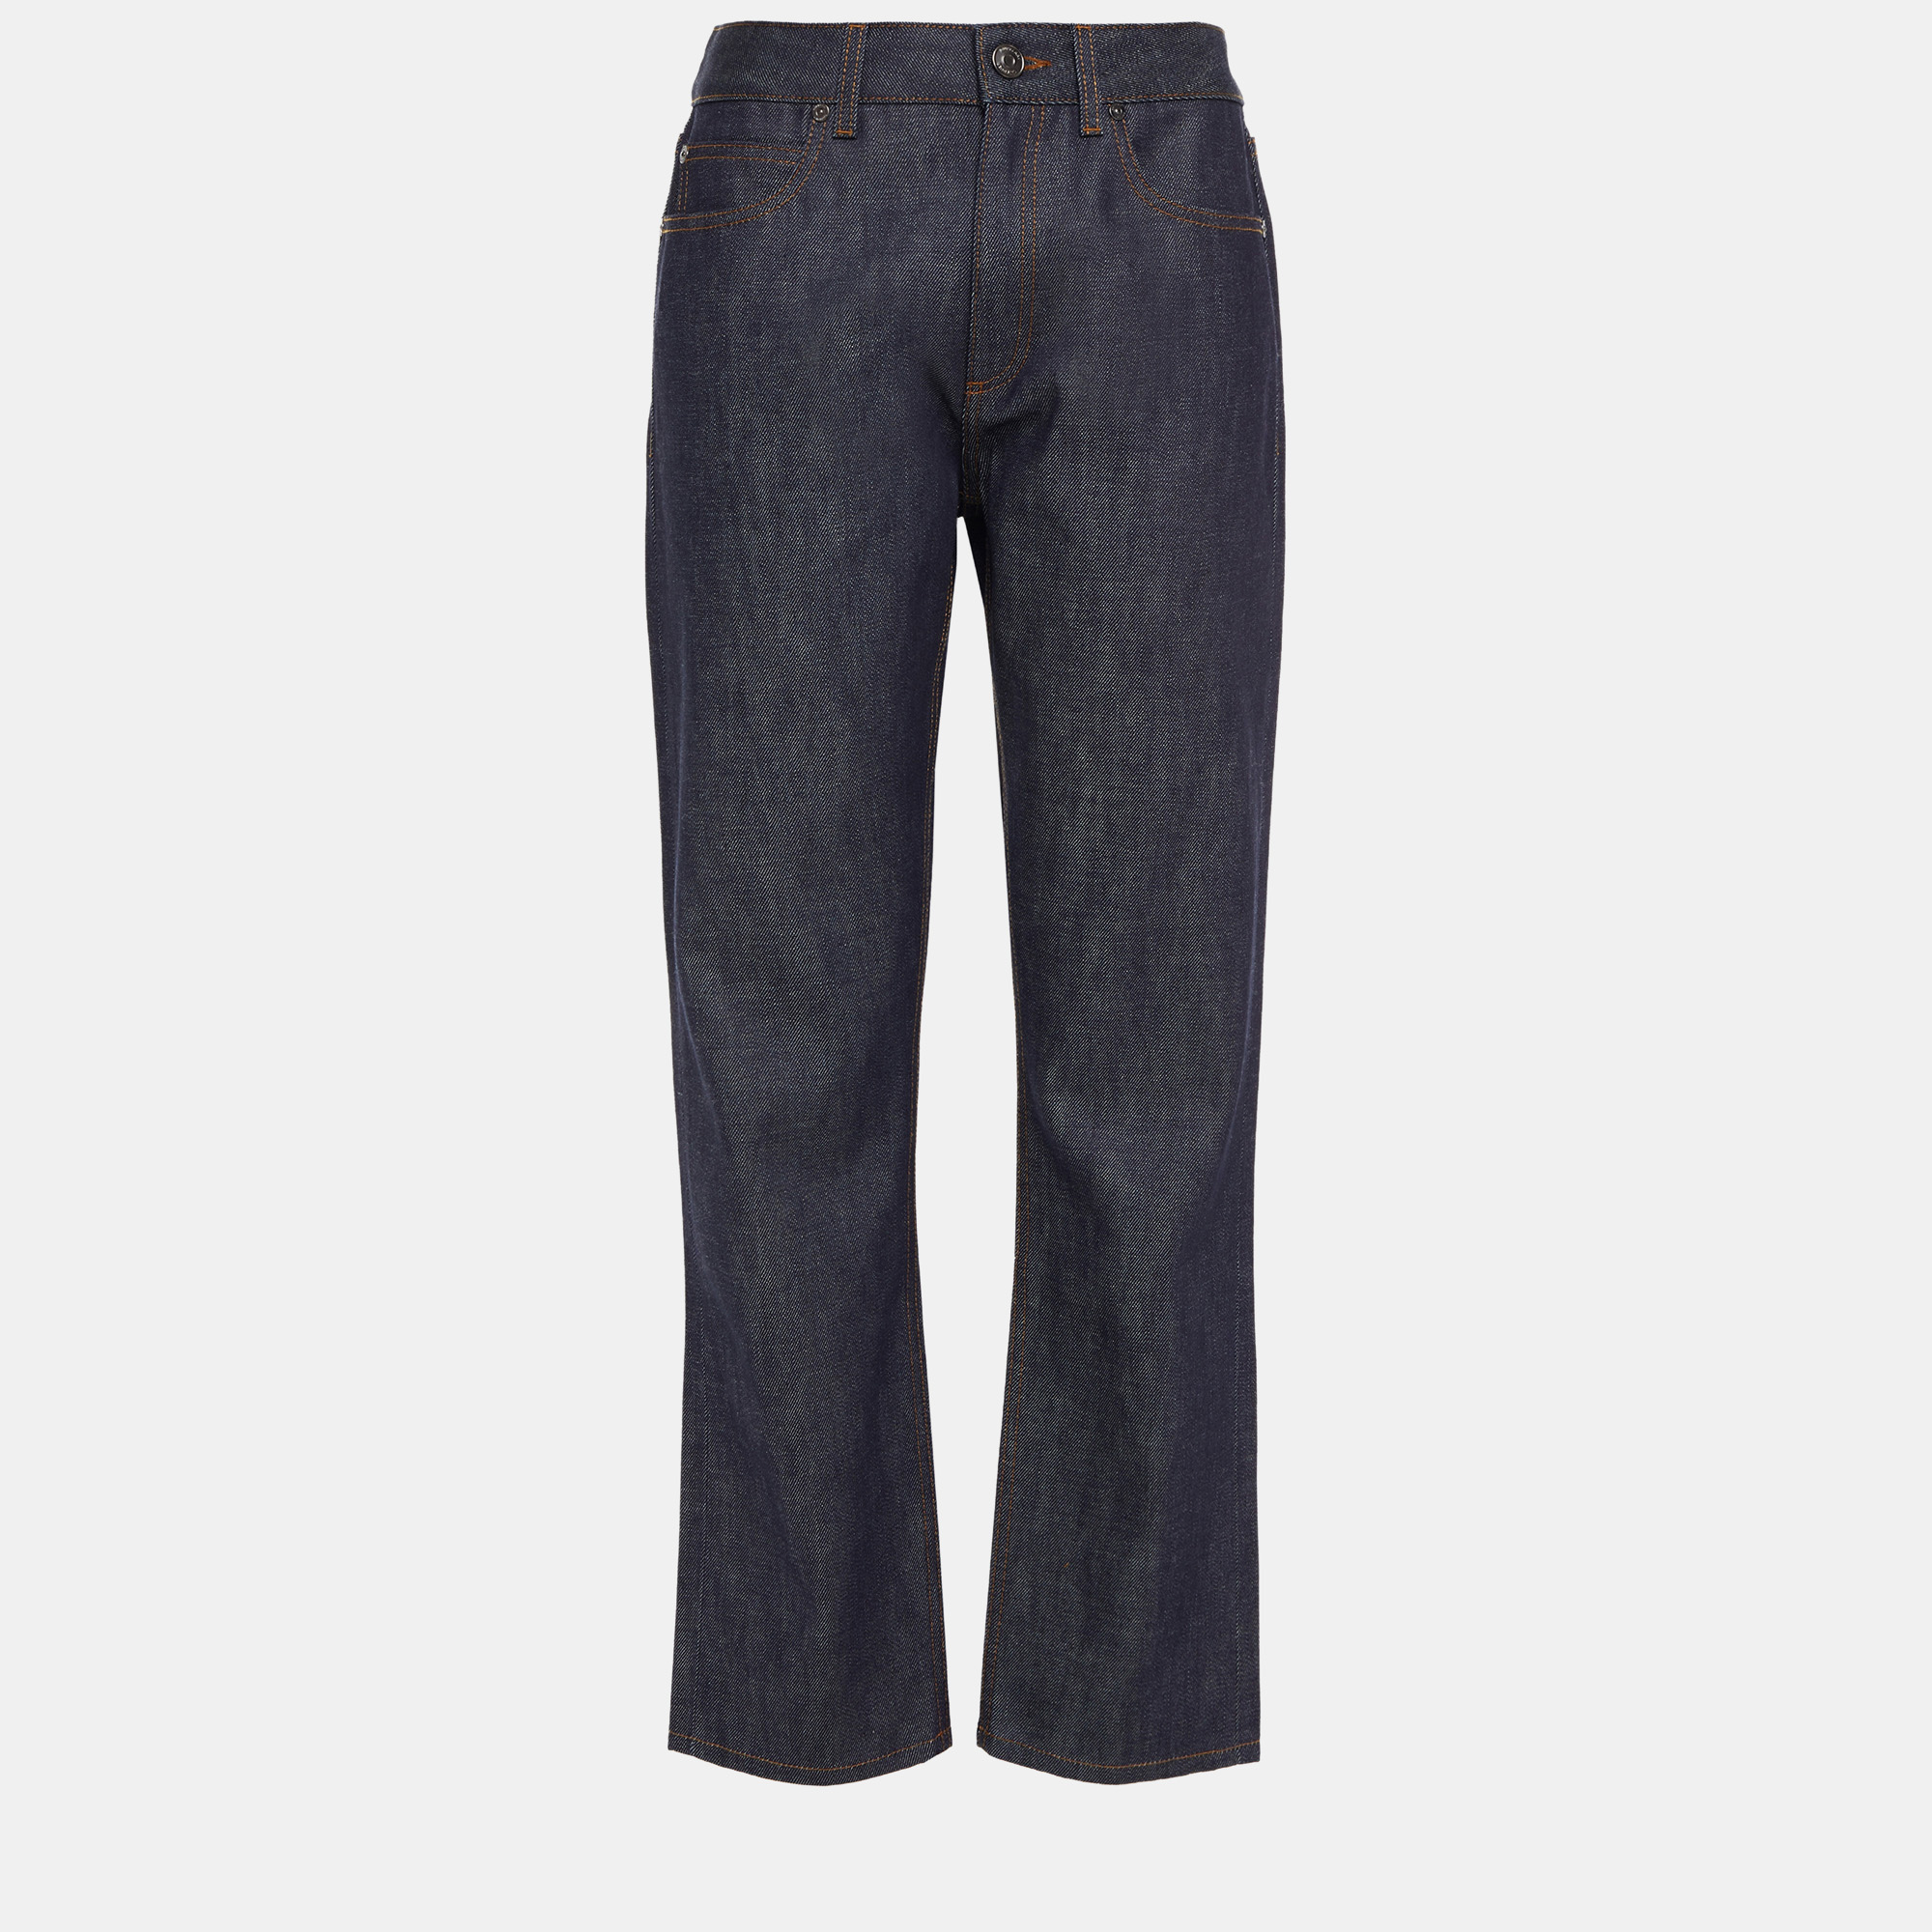 Burberry cotton straight leg jeans 25